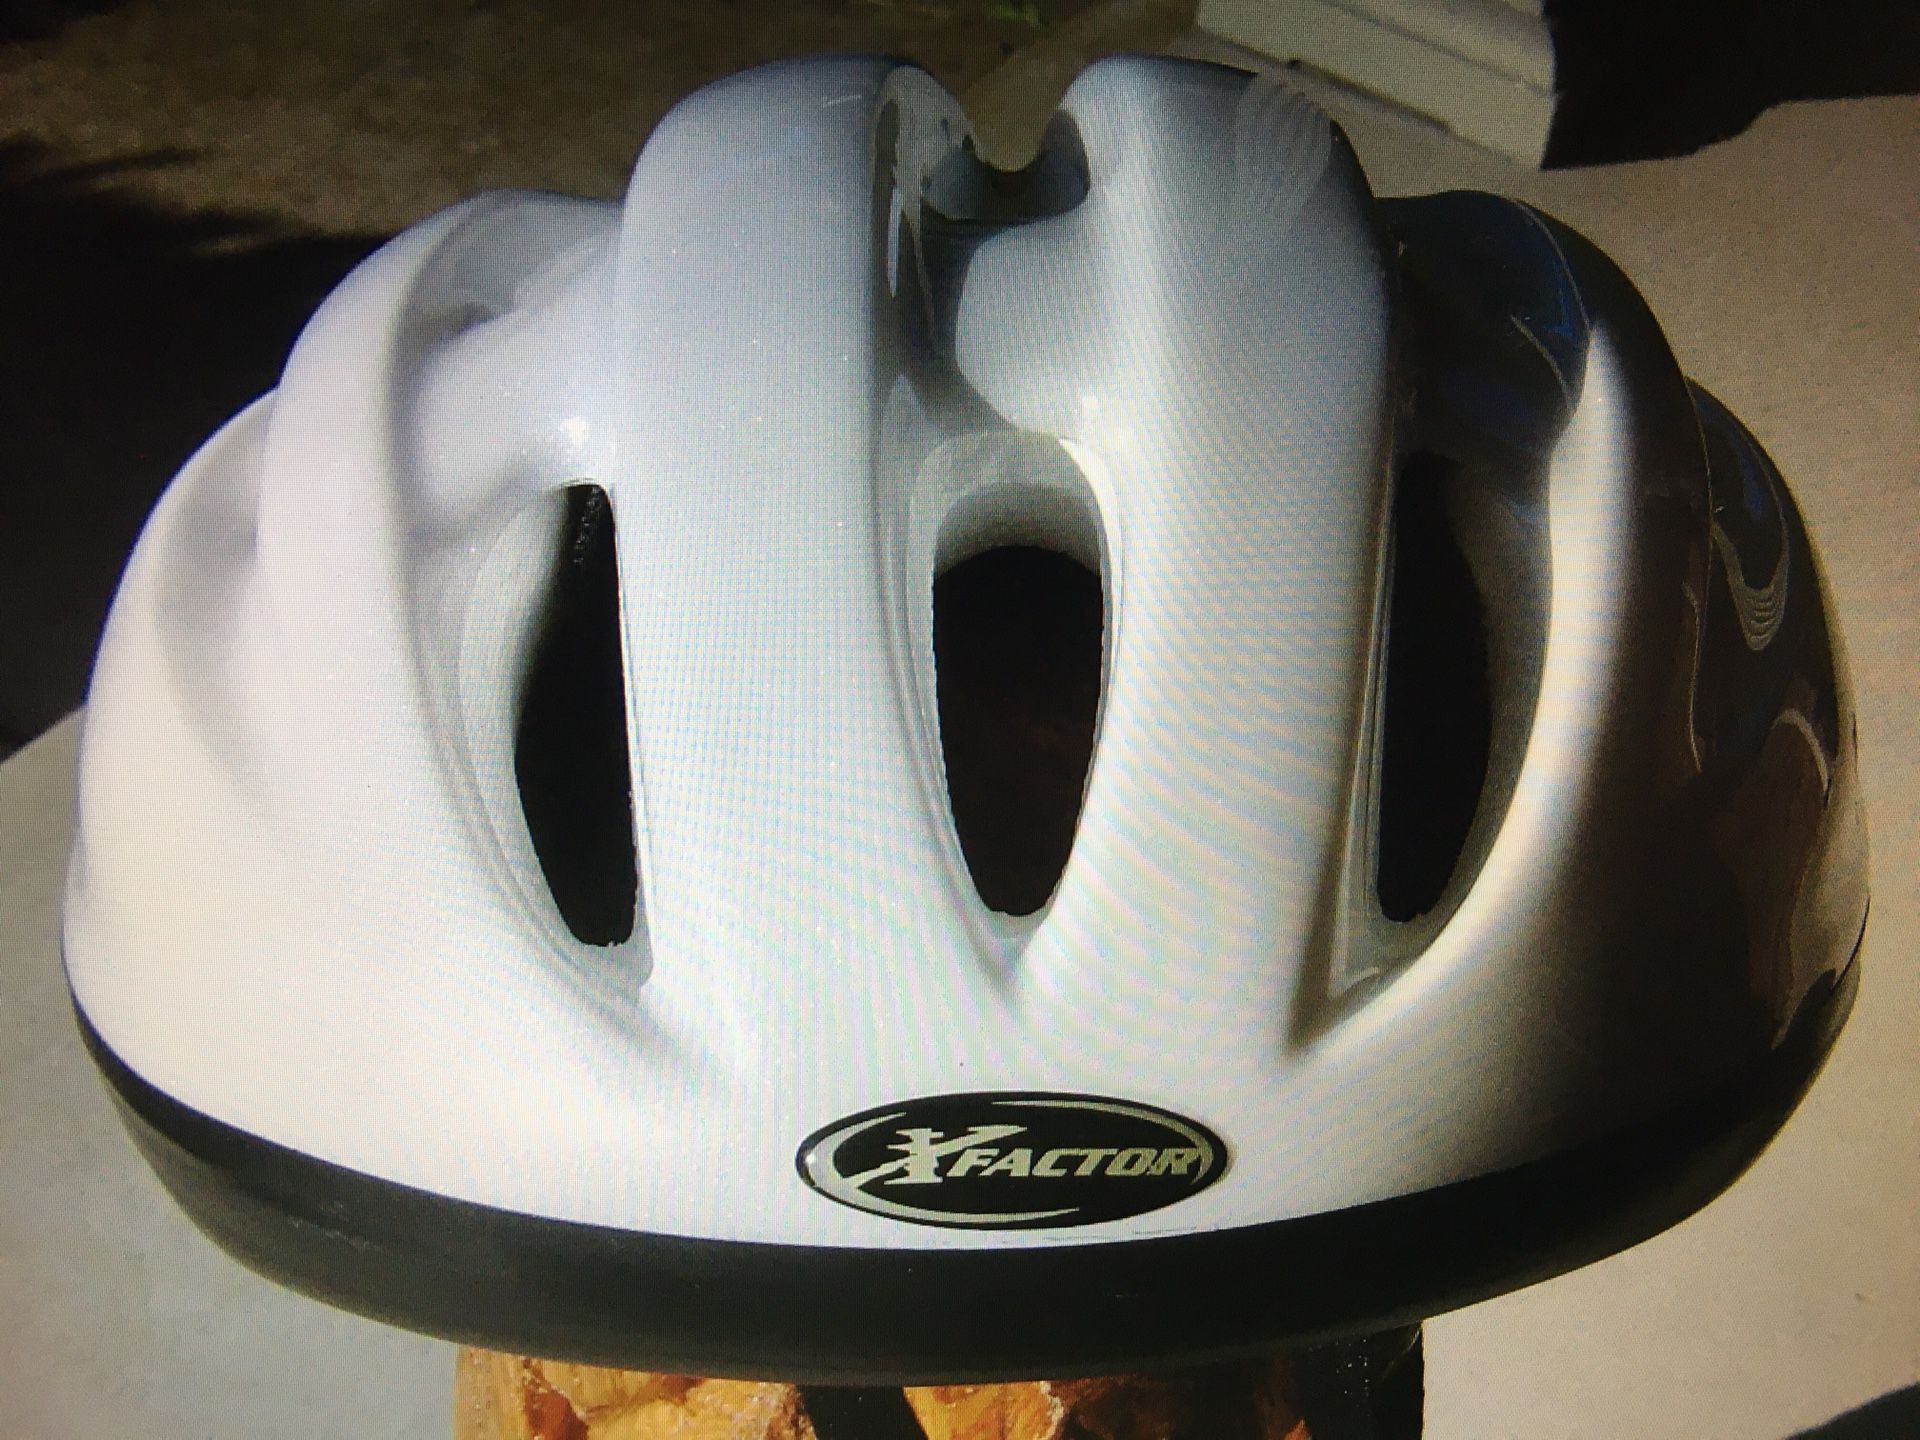 X-factor V10 bicycle Helmet